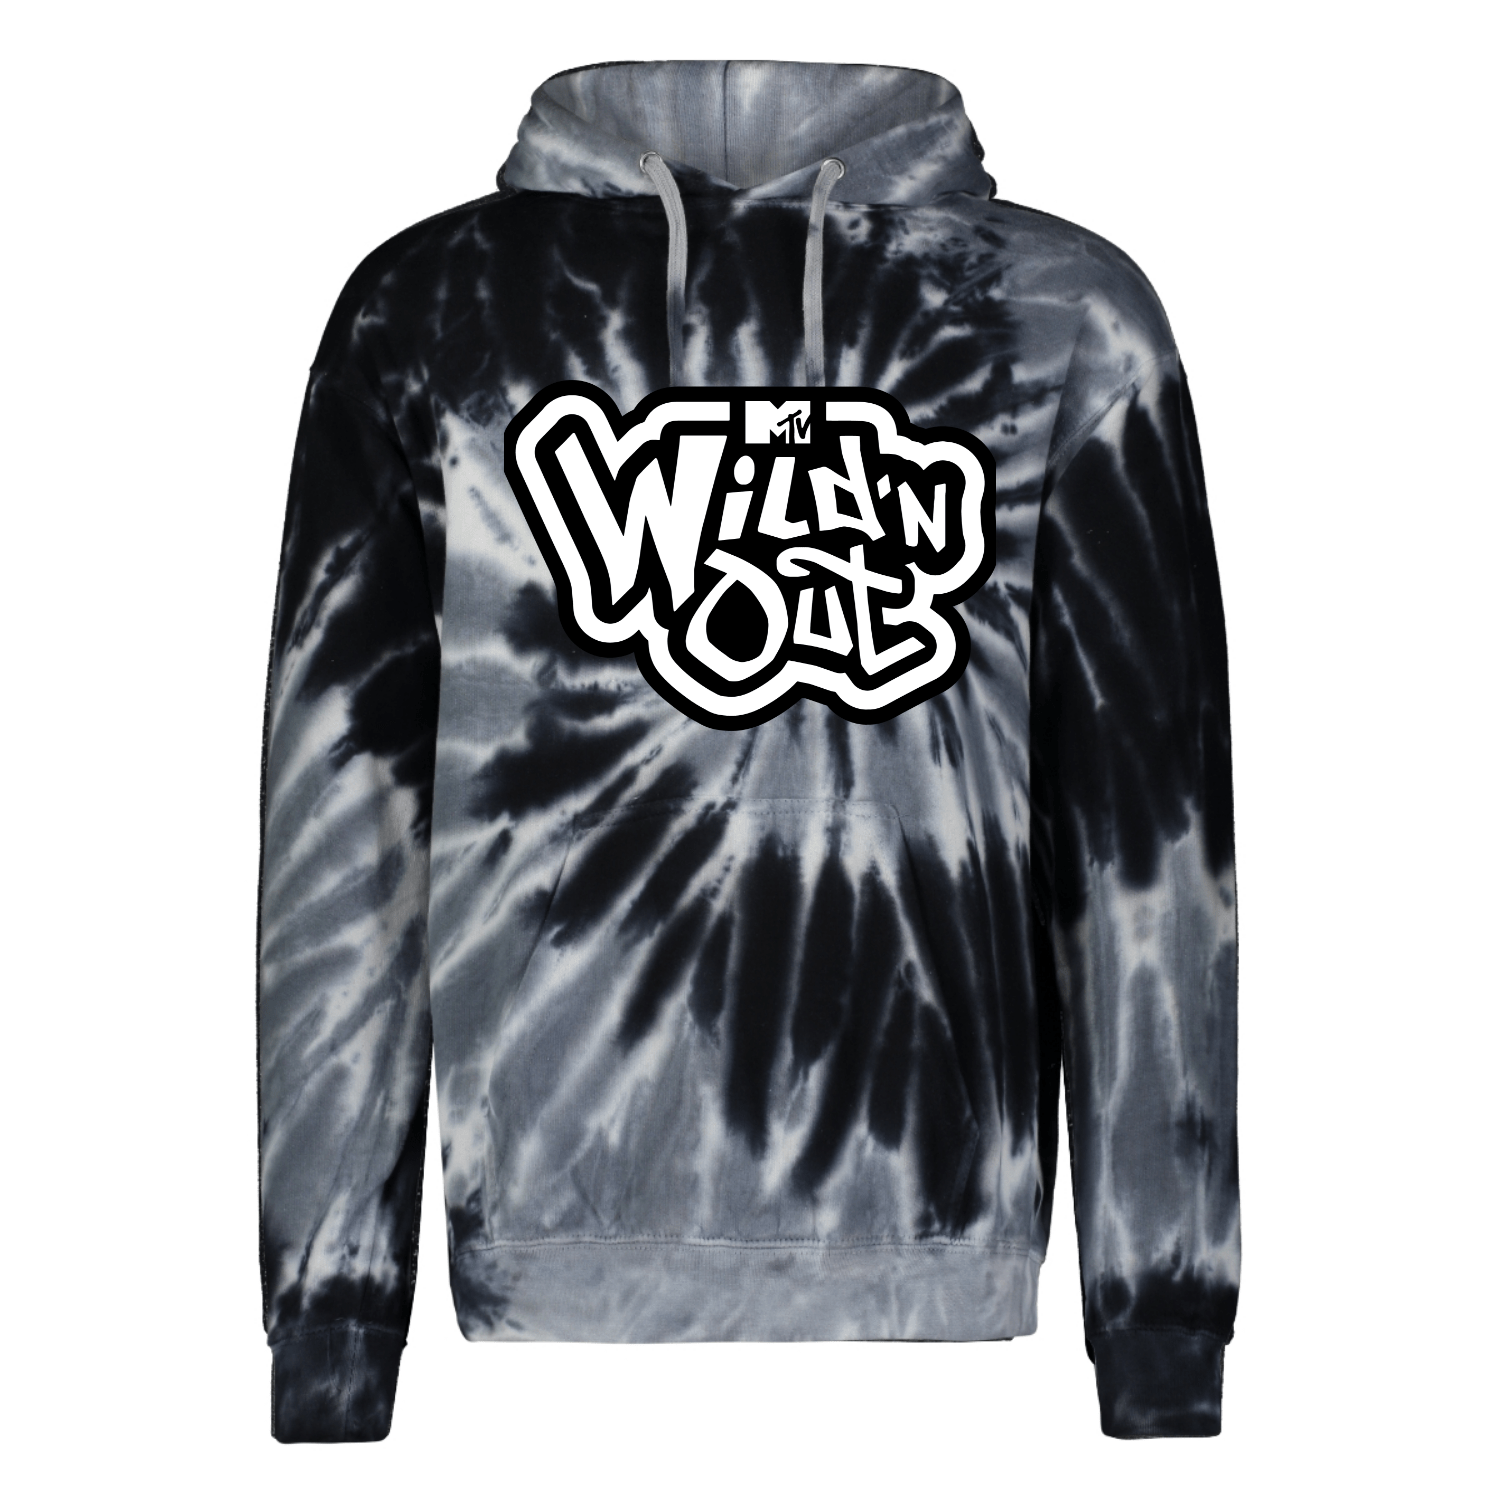 Wild 'N Out Black Tie Dye Hooded Sweatshirt - Paramount Shop